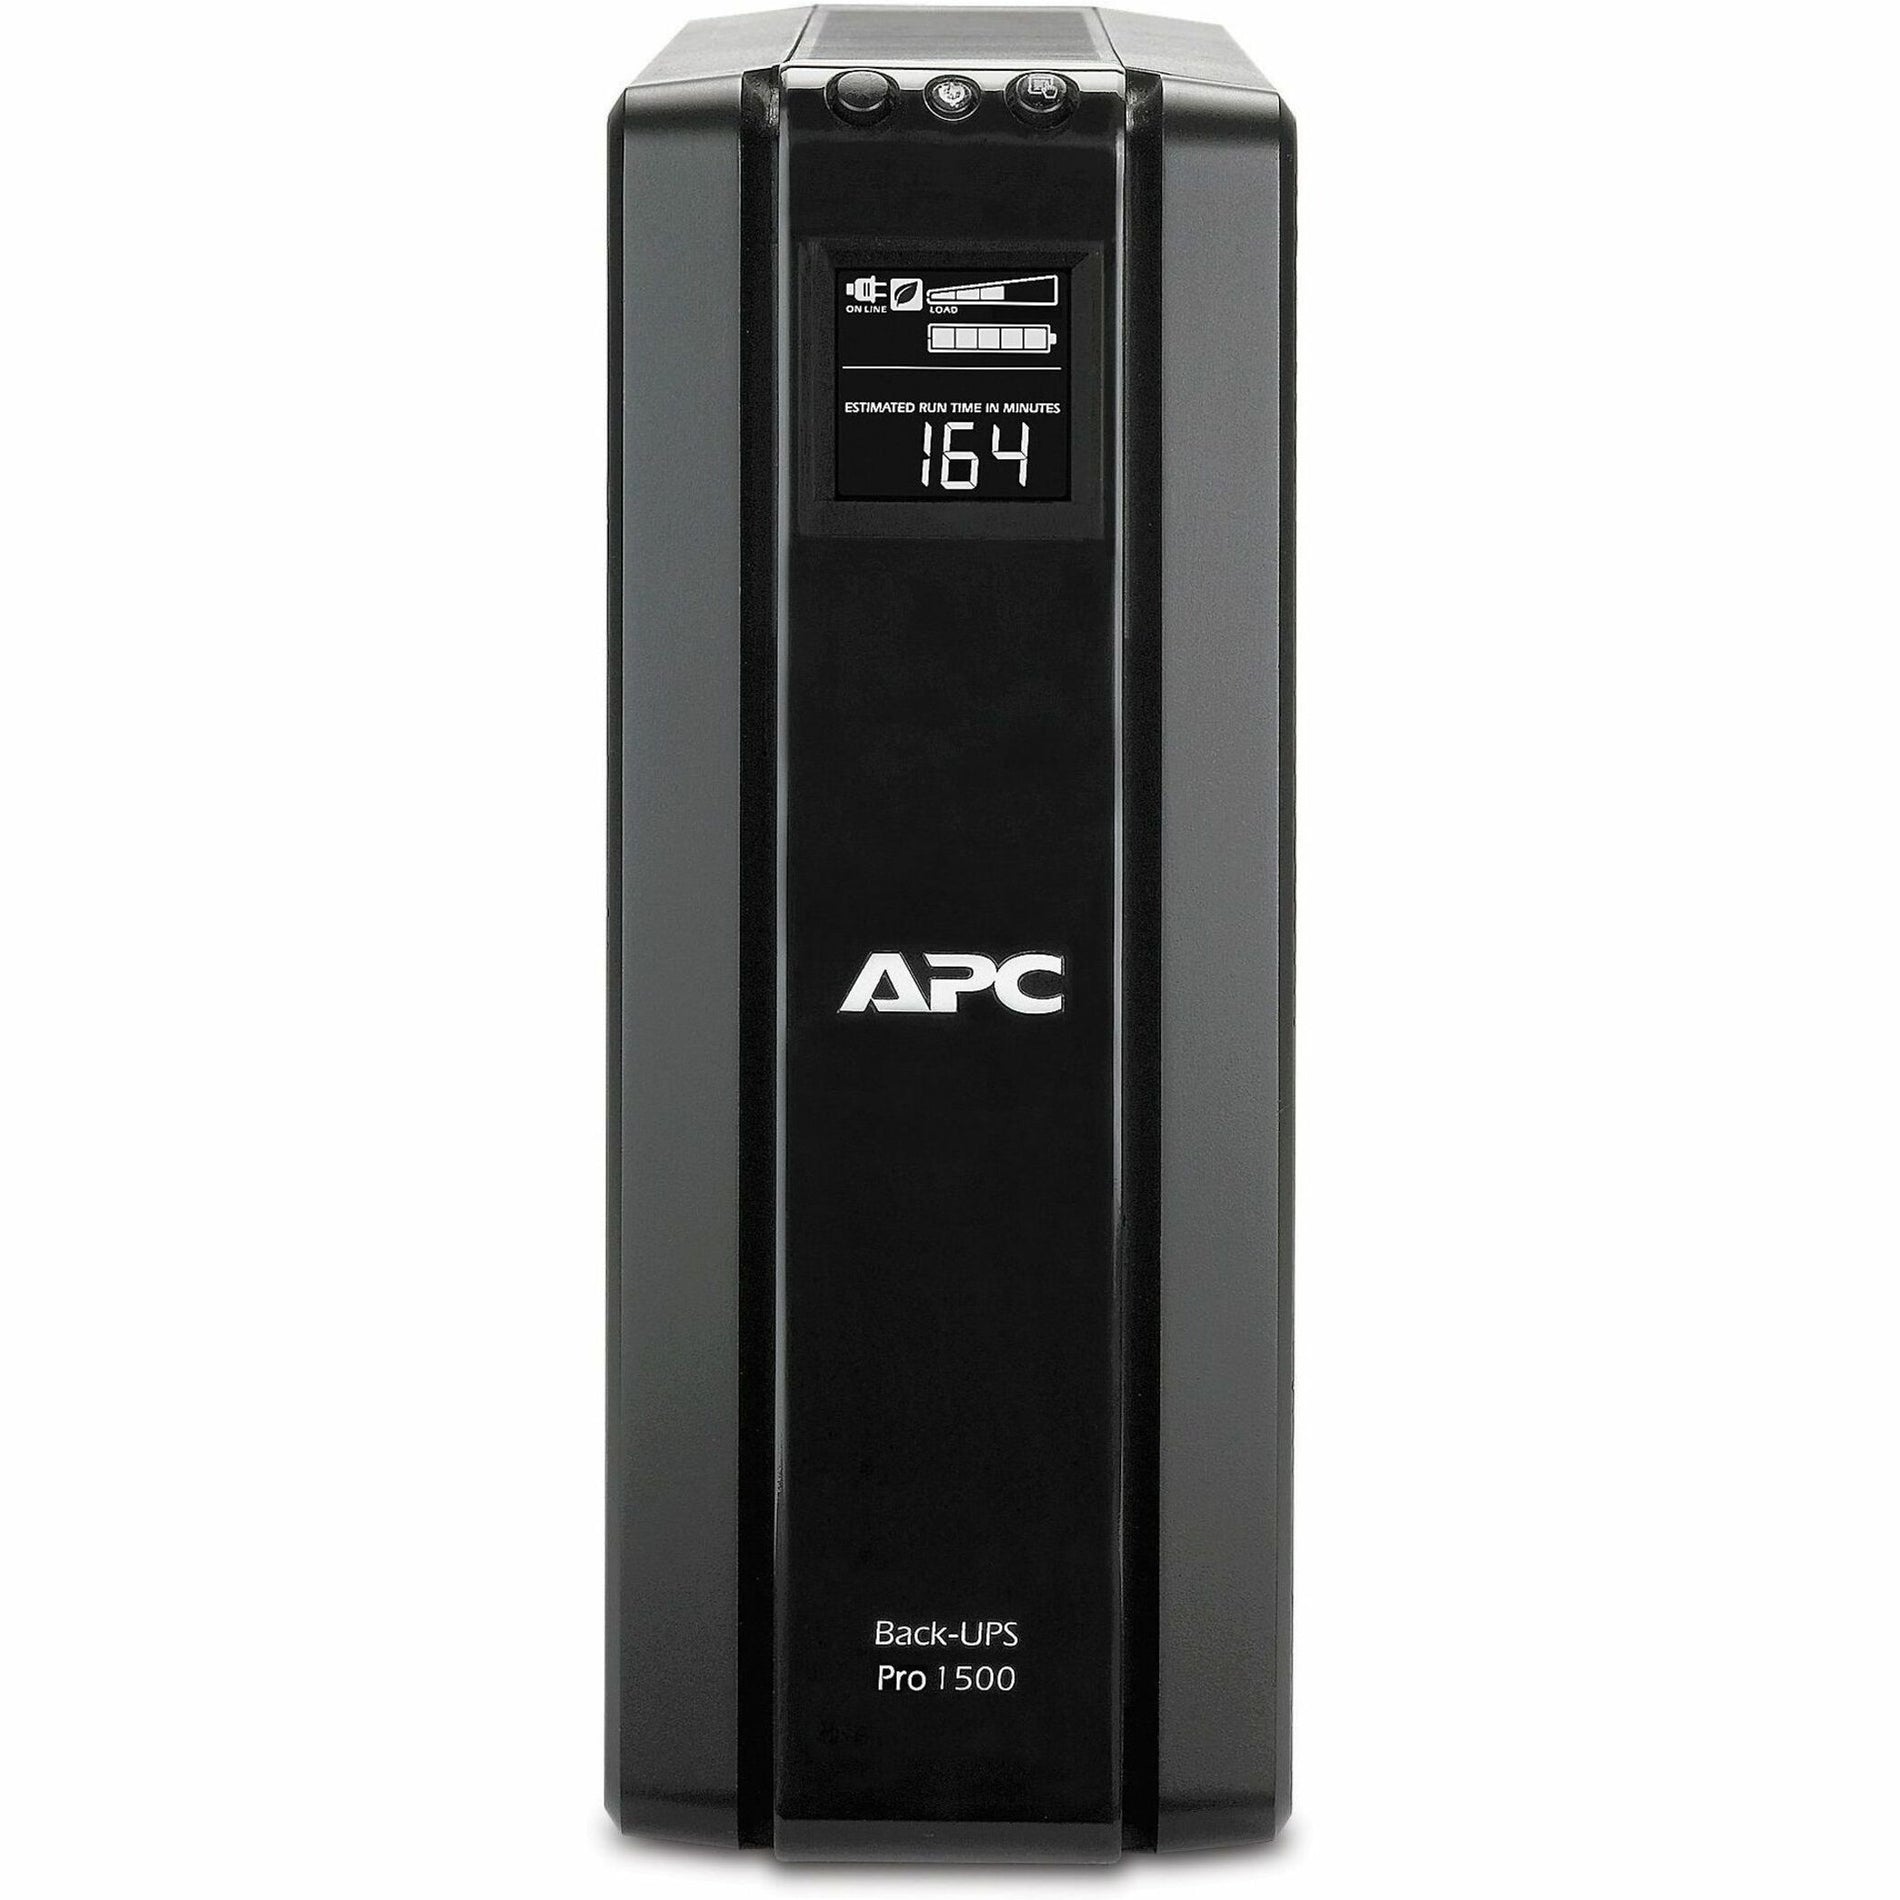 APC BR1500G Back-UPS Pro 1500, 1500 VA/865 W, 3 Year Warranty, Energy Star